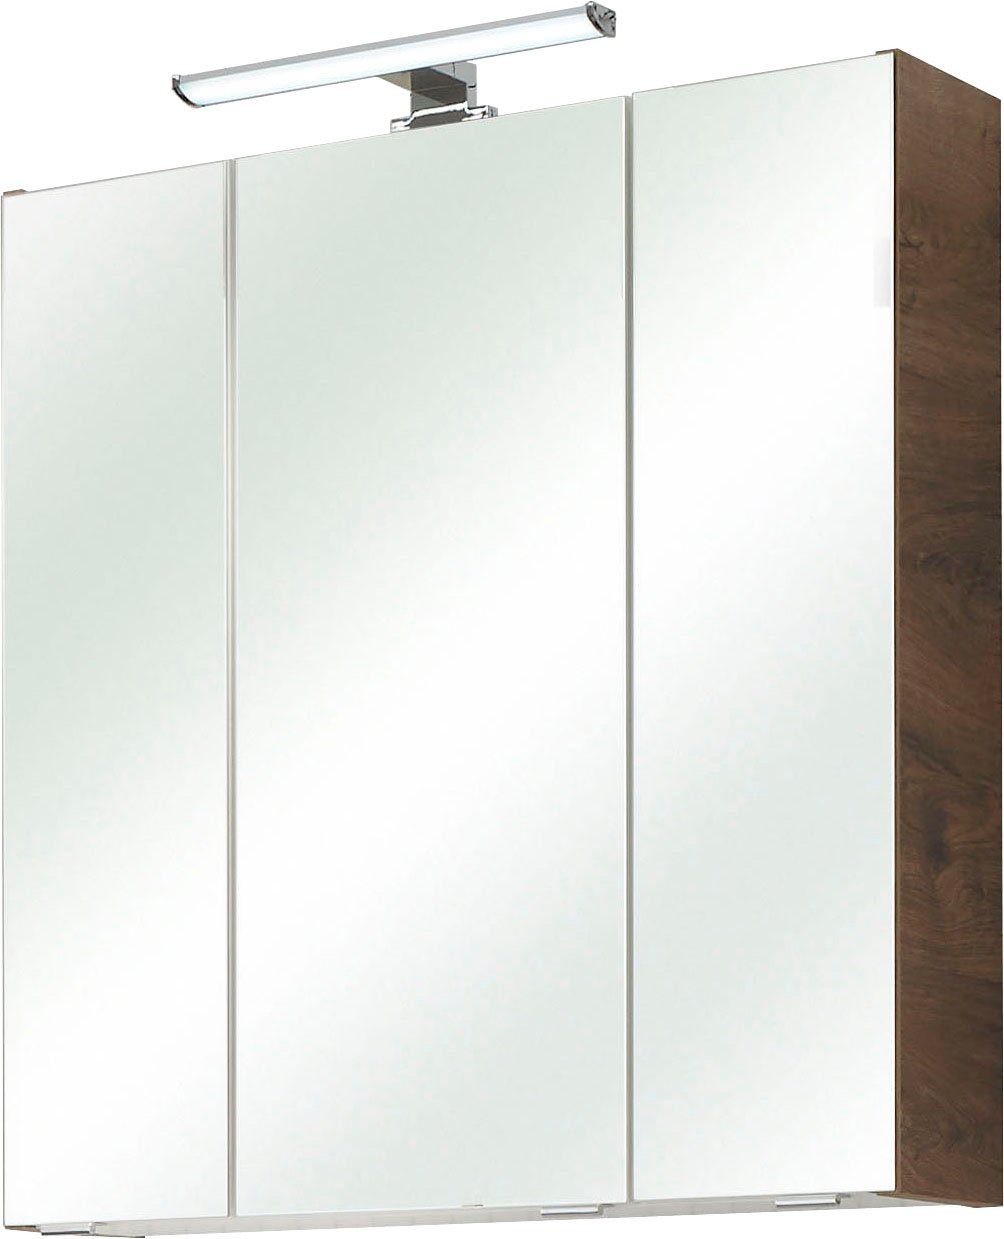 PELIPAL Spiegelschrank Quickset Breite 65 LED-Beleuchtung, cm, 3-türig, Schalter-/Steckdosenbox